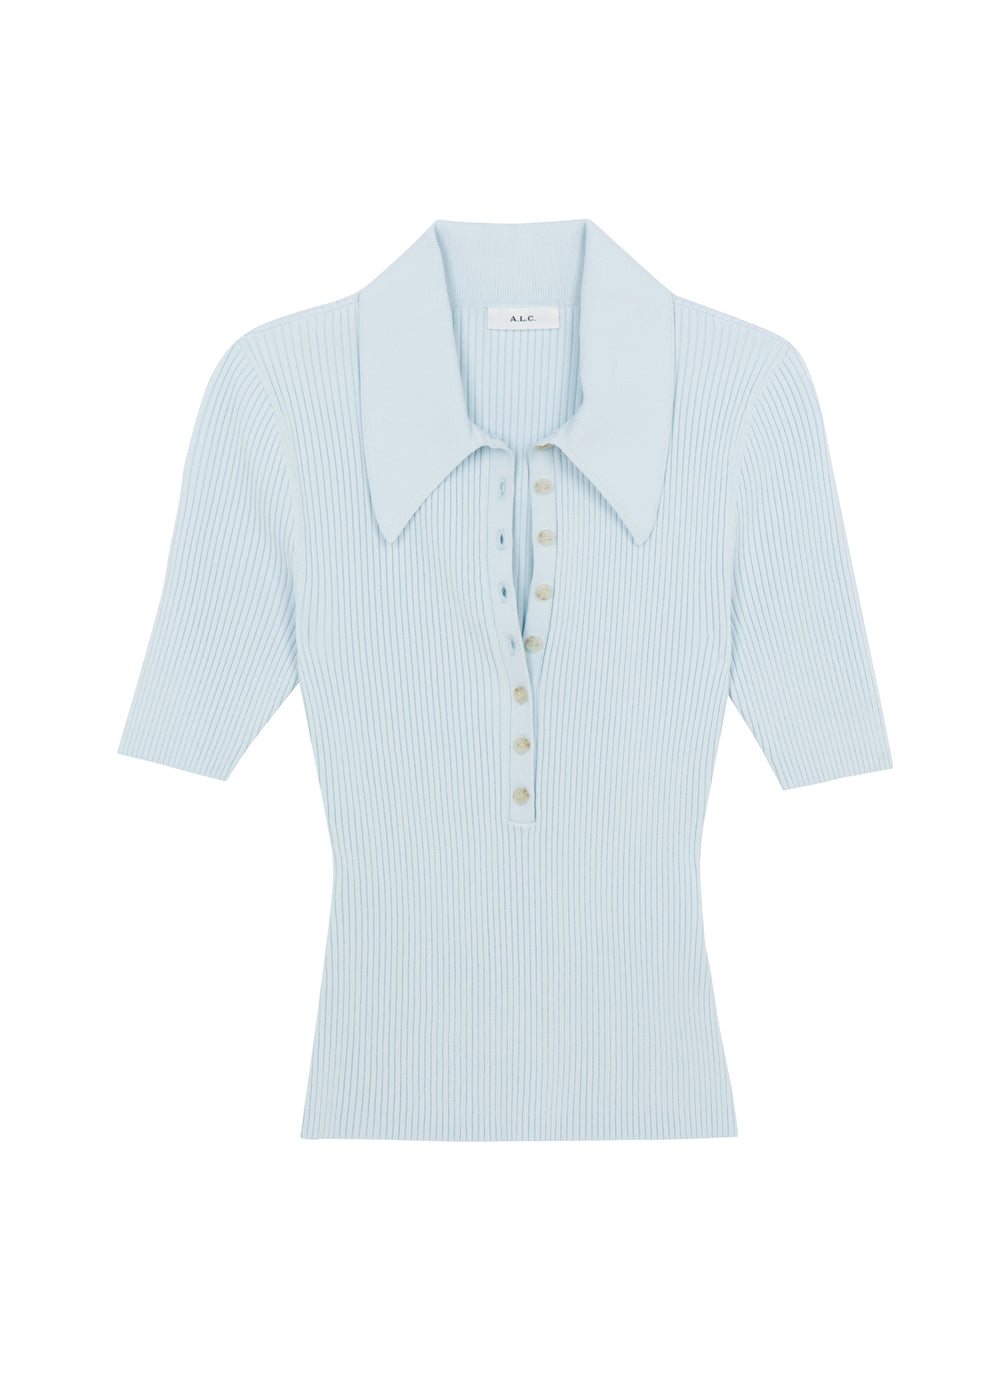 flatlay of light blue short sleeve collared knit top